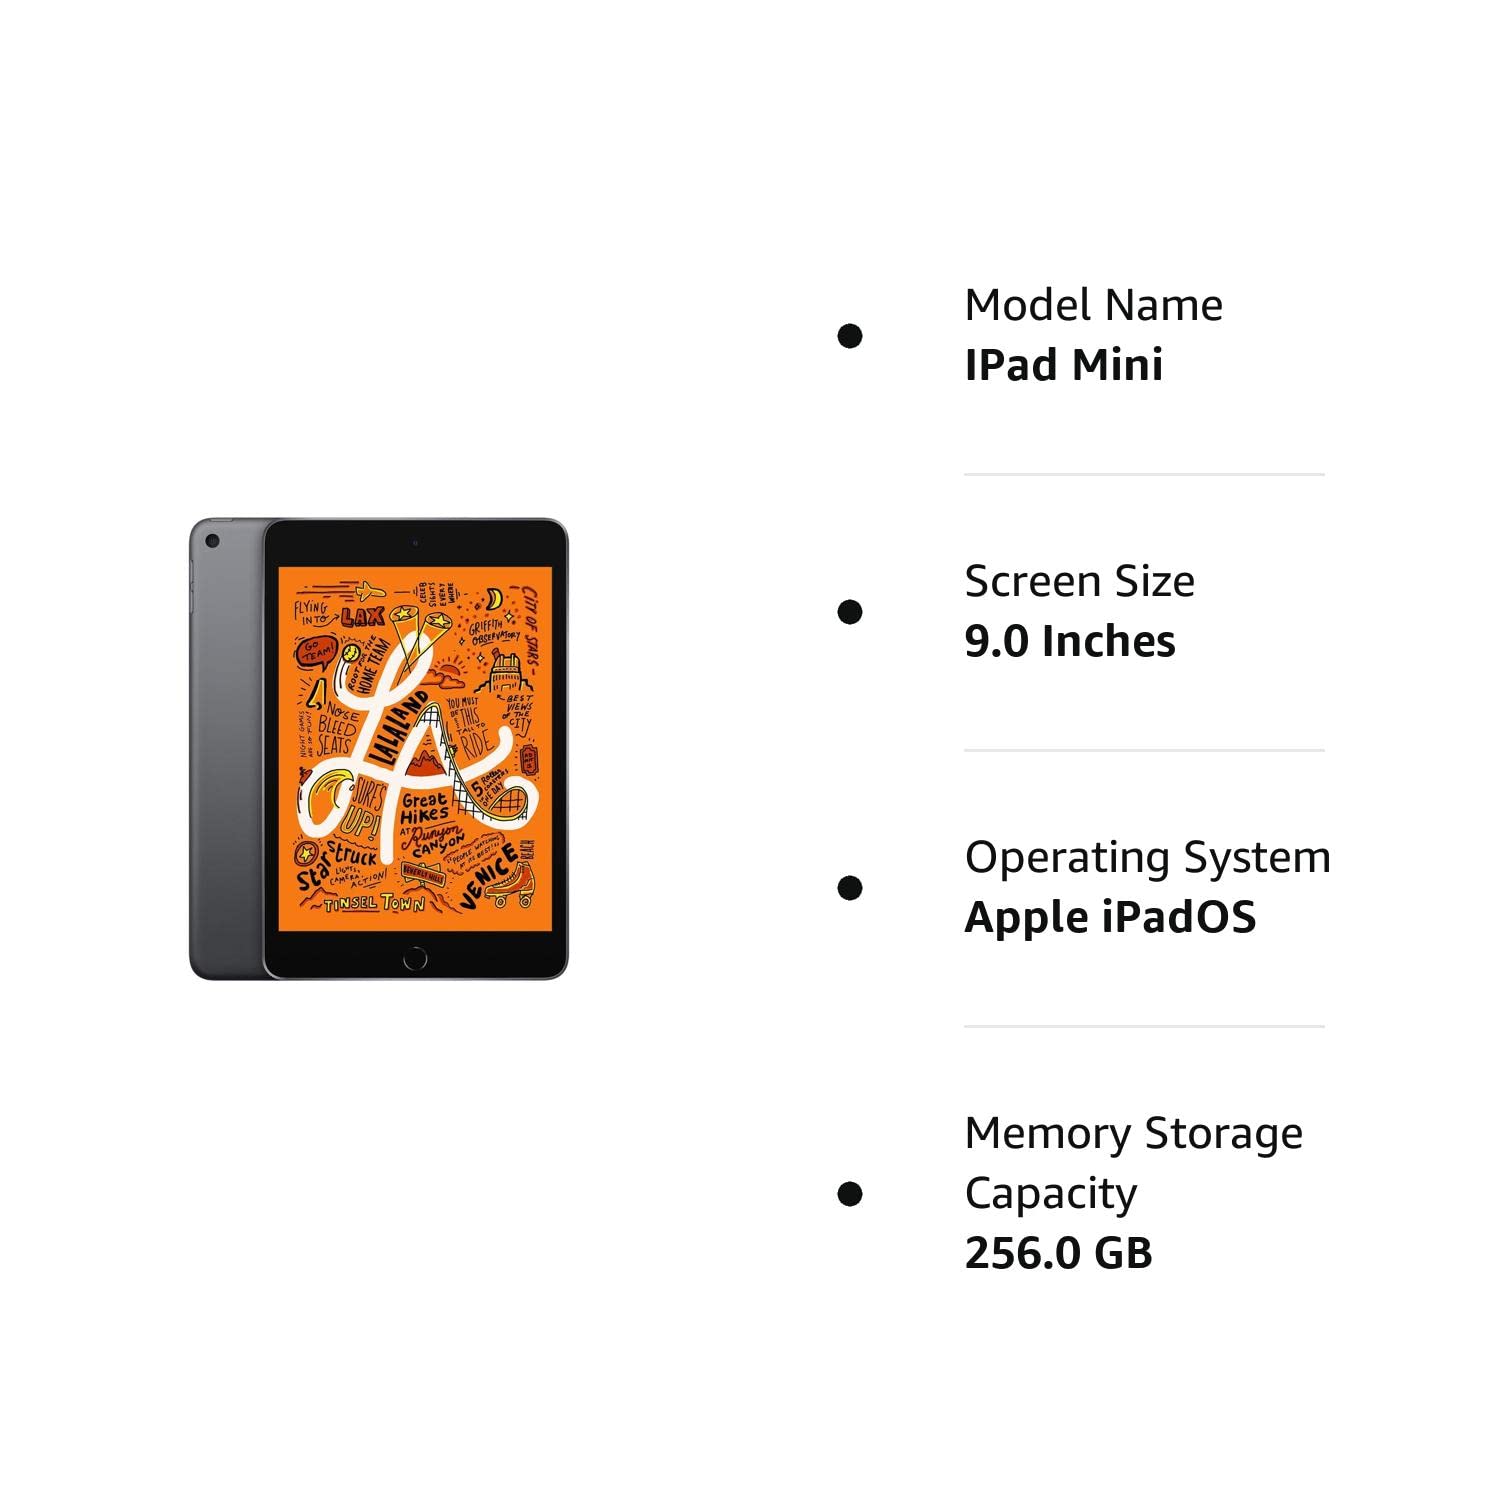 Apple iPad mini 7.9 inches (Early 2019 ) 256GB, WiFi Only - Space Gray (Renewed)